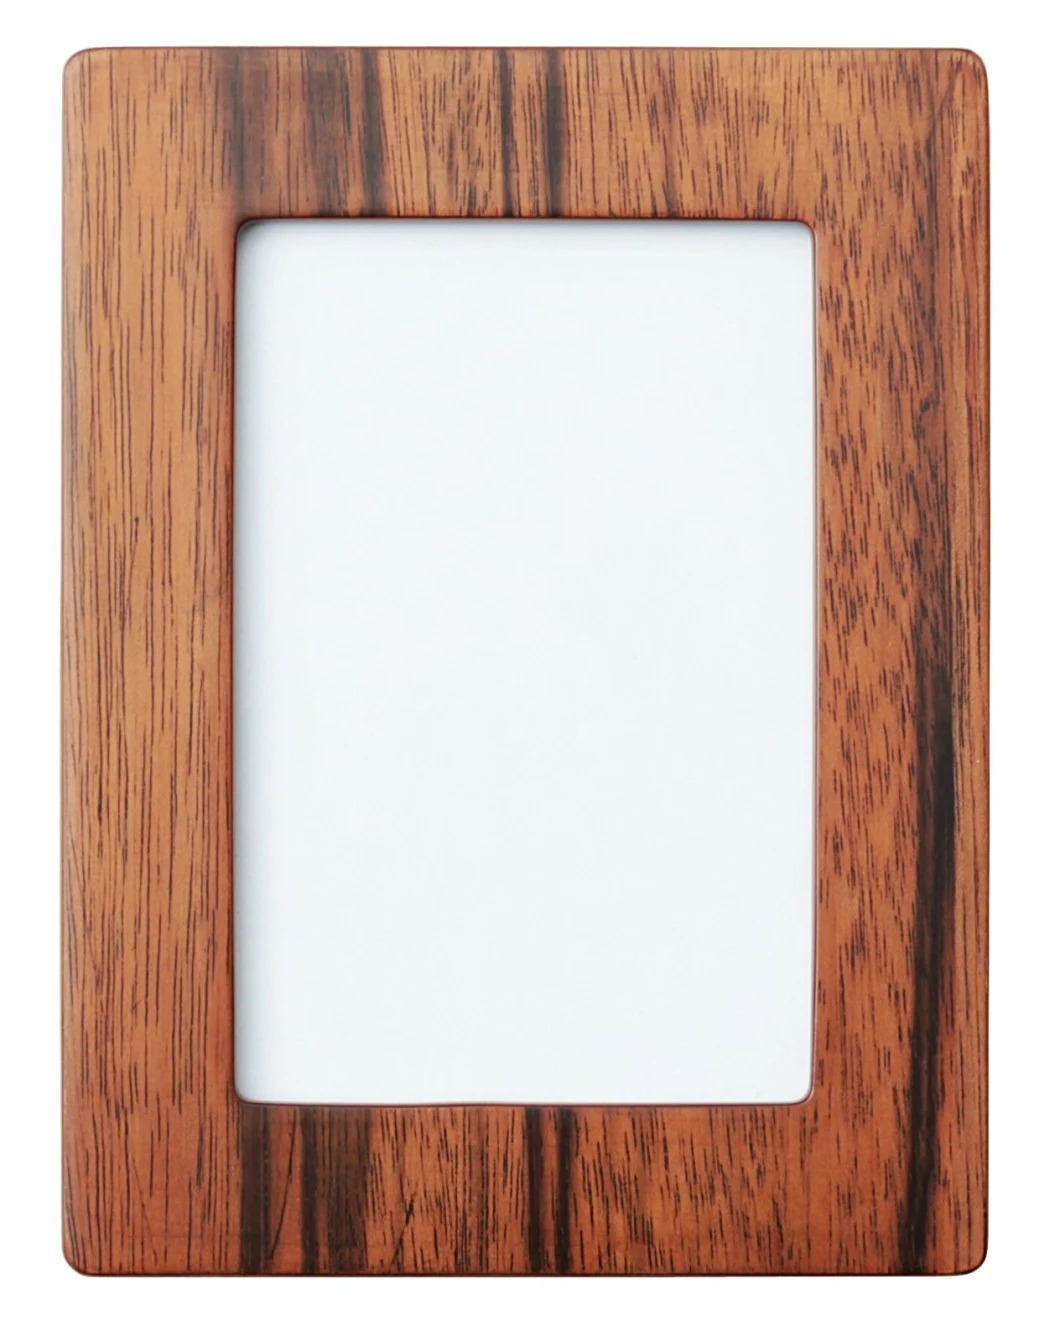 Walnut Semi-Gloss Finish Wooden Desk/Wall Picture Photo Certificate Diploma Art Craft Frame